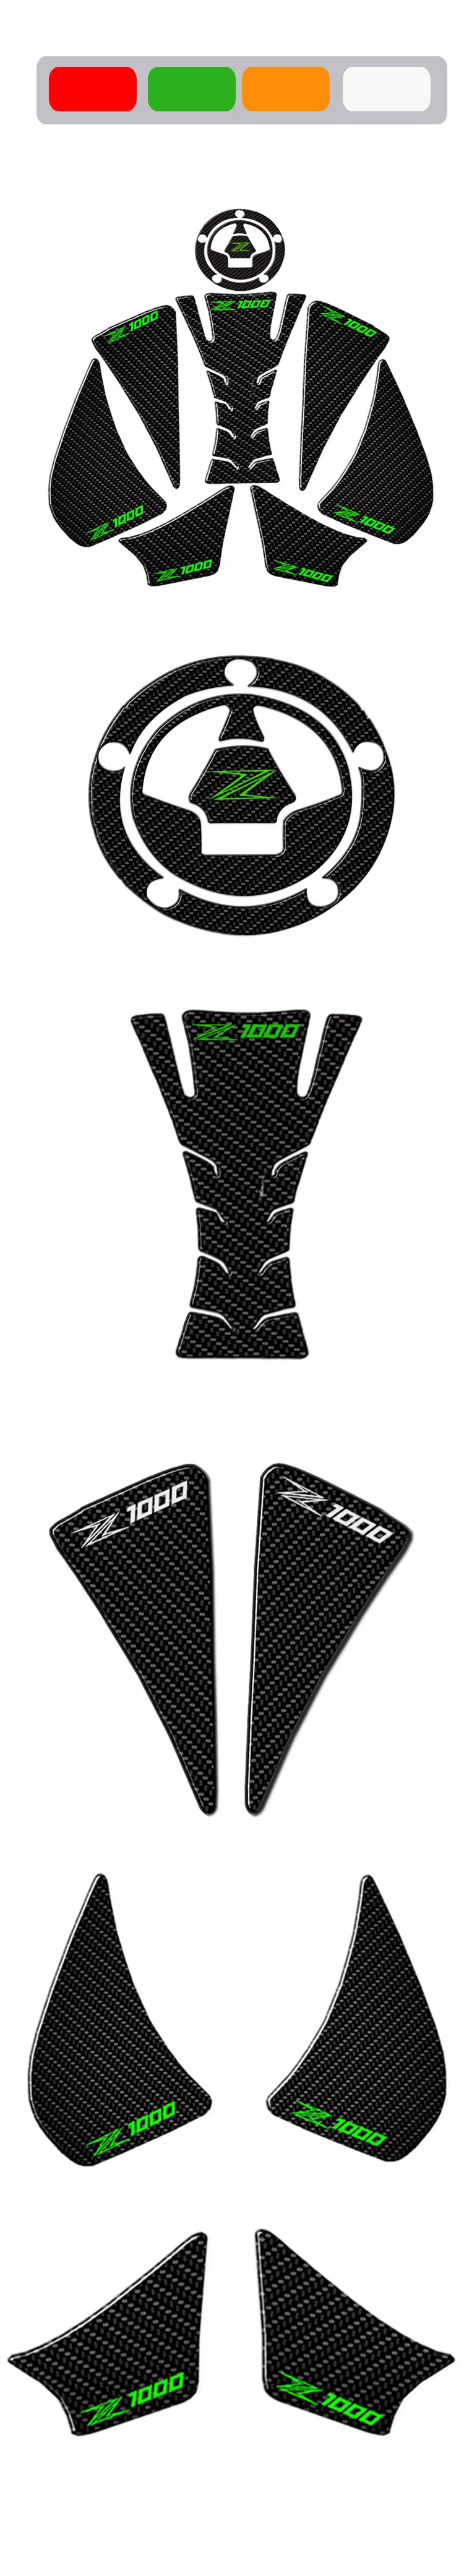 Для KAWASAKI z1000 2012-2016 Лидер продаж аксессуары для мотоциклов 3D волокно Набор наклеек Танк наклейка протектор Pad набор